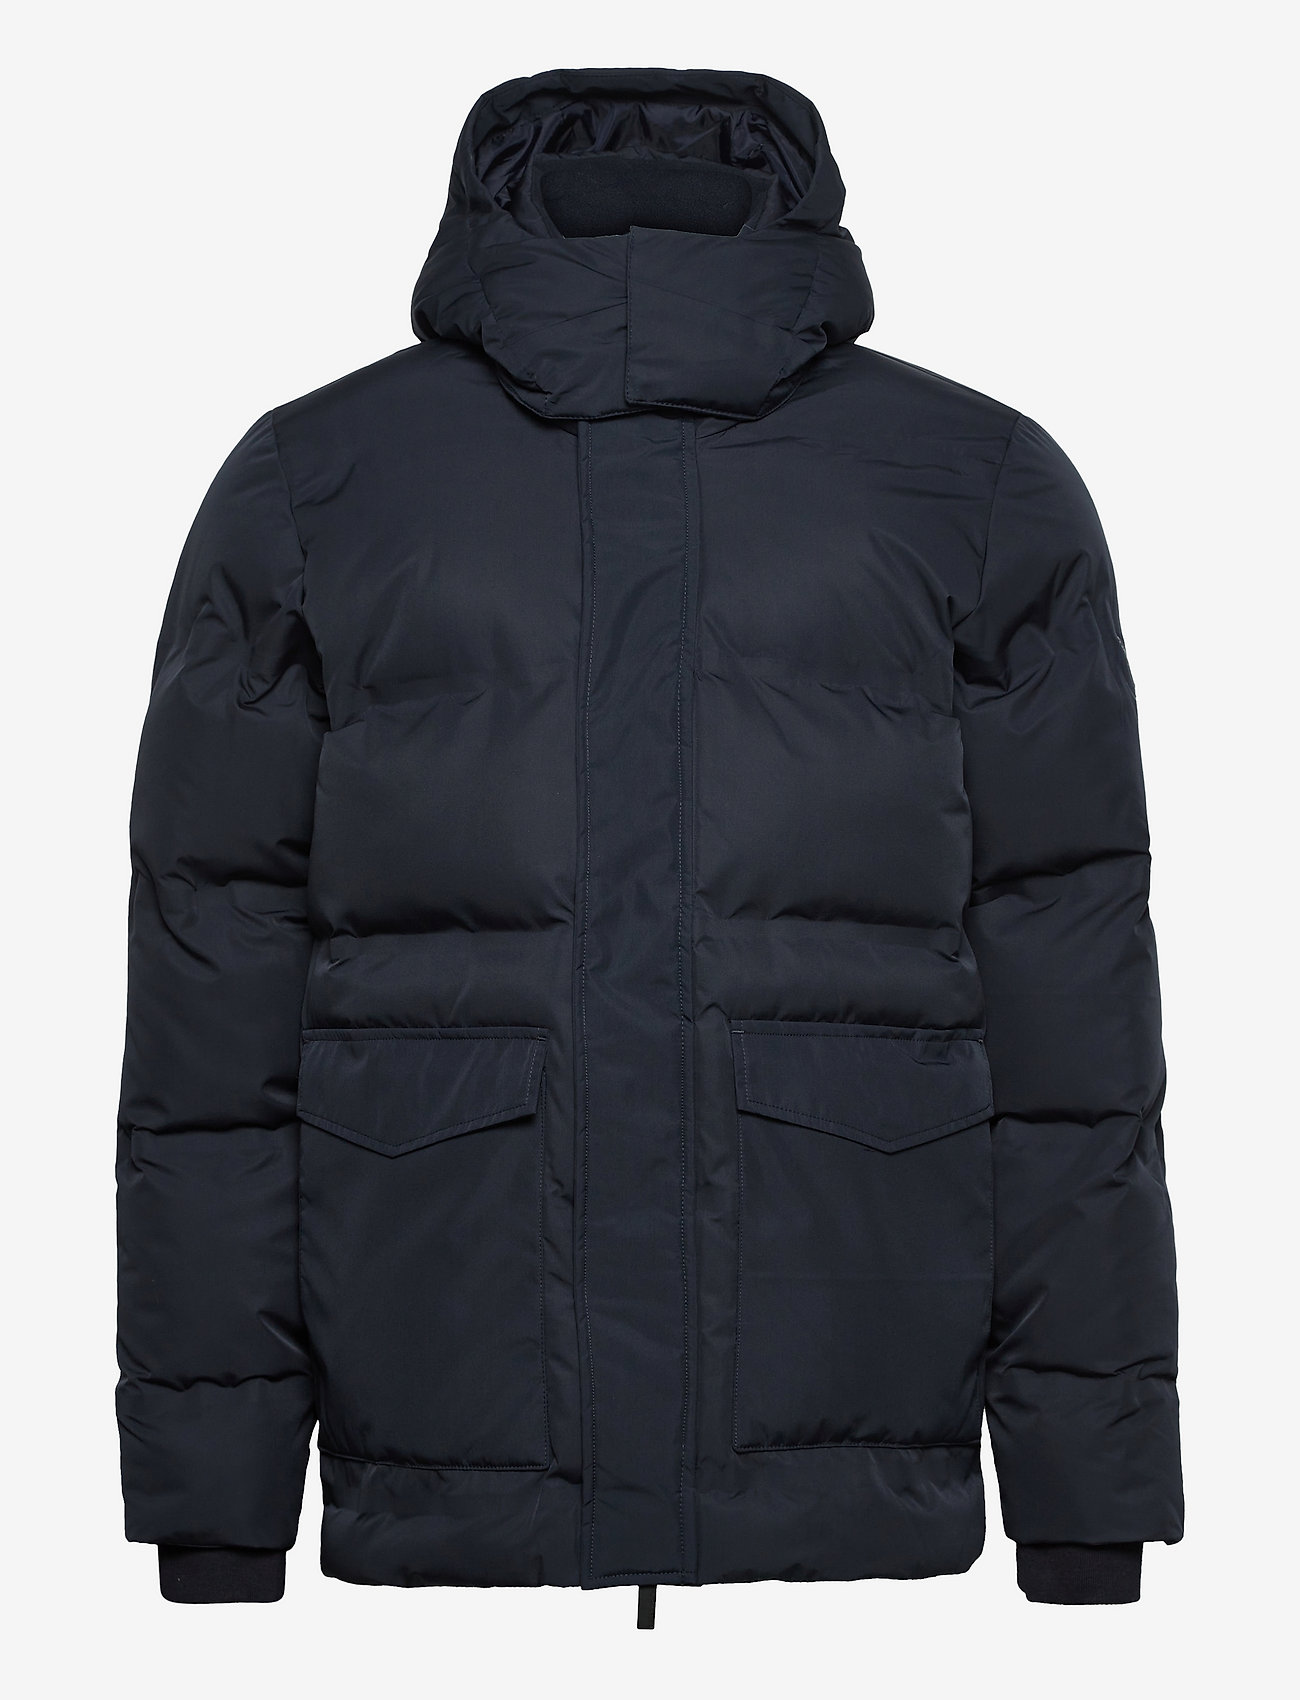 Knowledge Cotton Apparel - Puffer jacket - GRS/Vegan - vinterjackor - total eclipse - 0